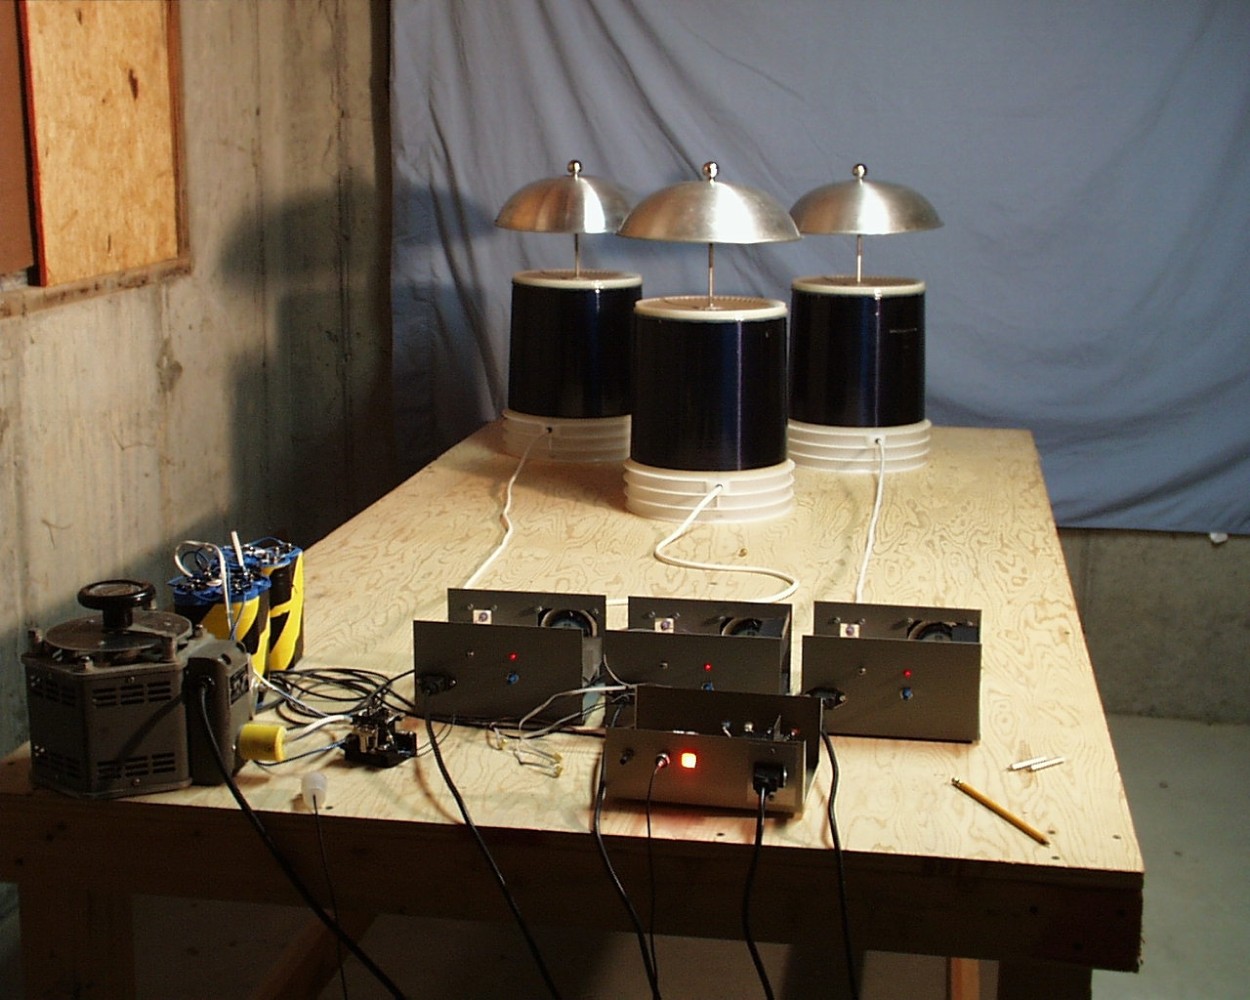 2000 3-phase Tesla coil system with 3 resonators setup